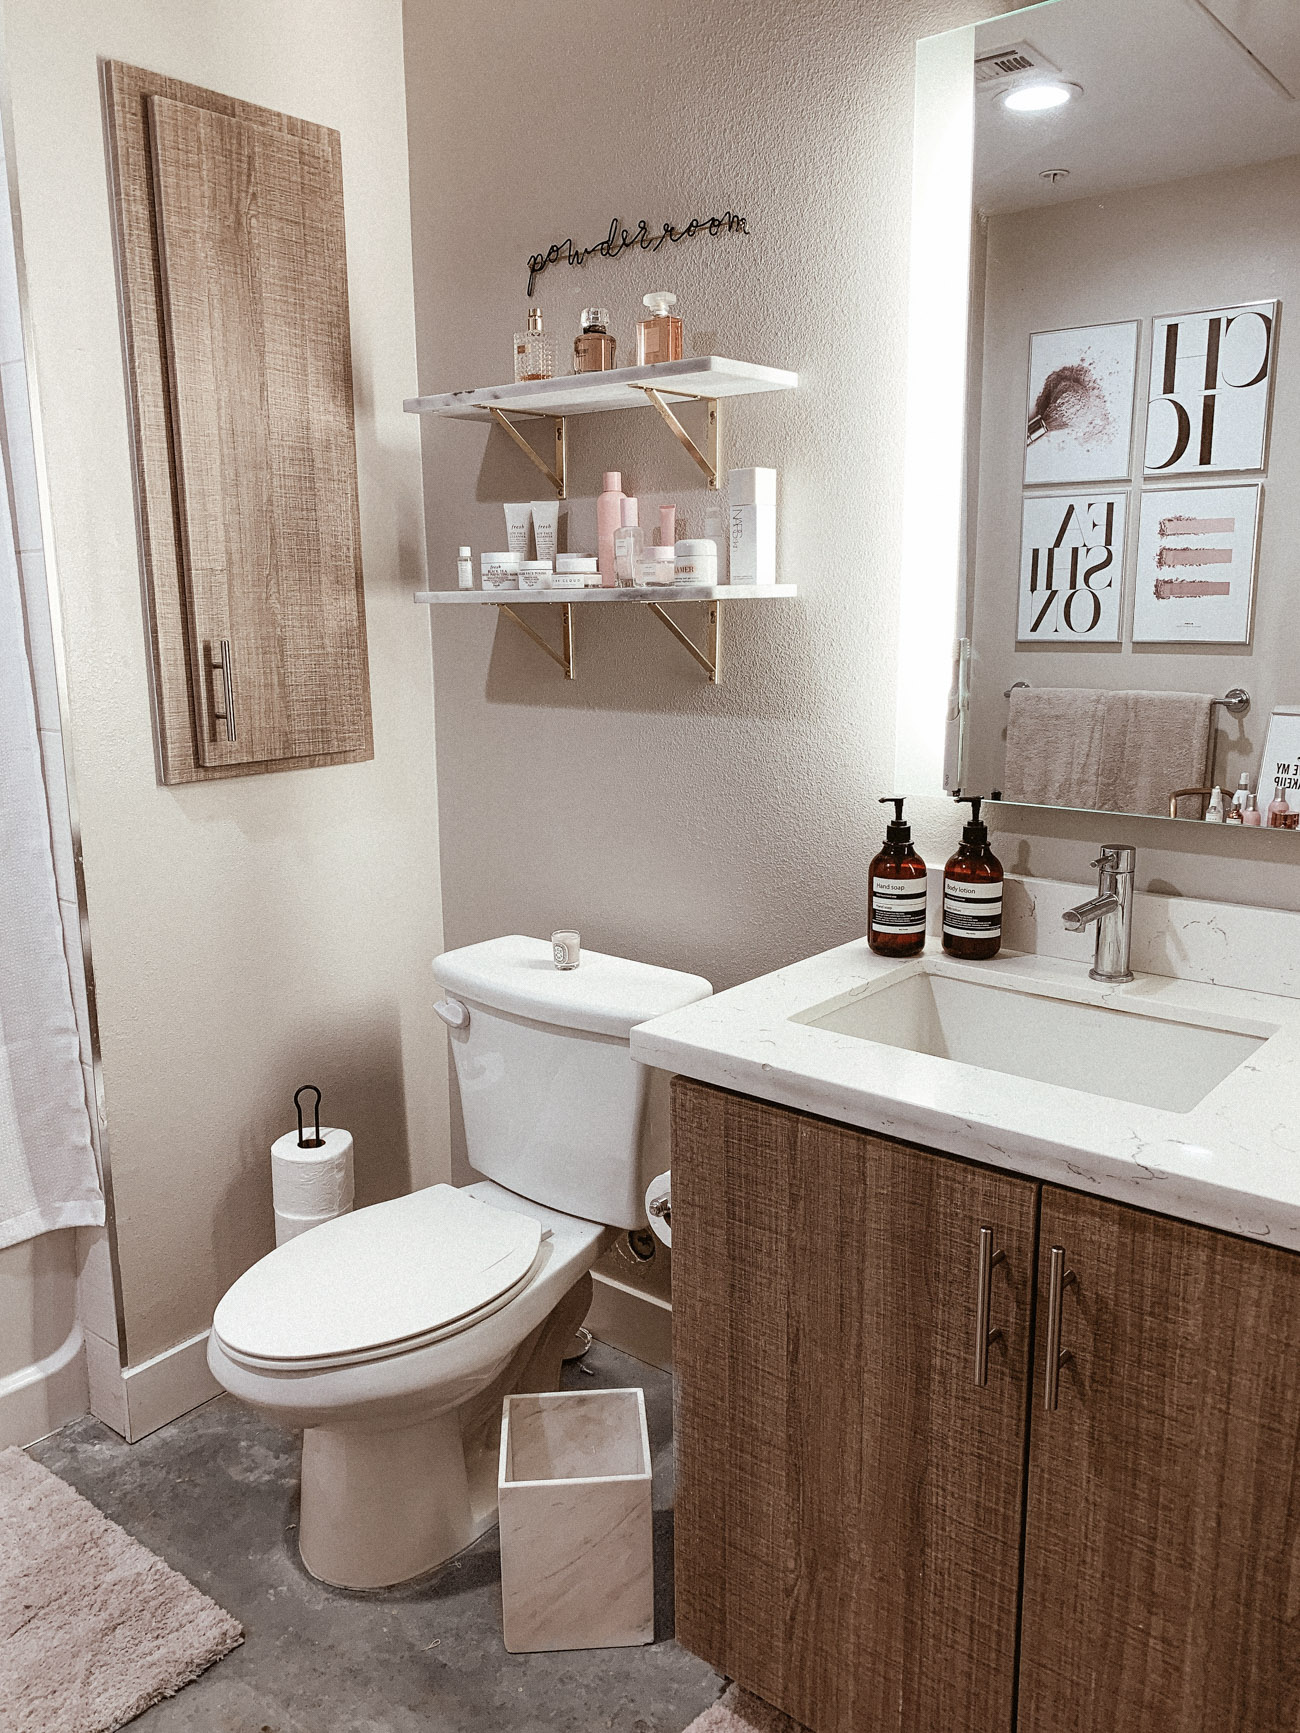 Apartment Bathroom Decor | Bathroom Decor | Small Bathroom | Powder Room | Home Decor | Blondie in the City by Hayley Larue